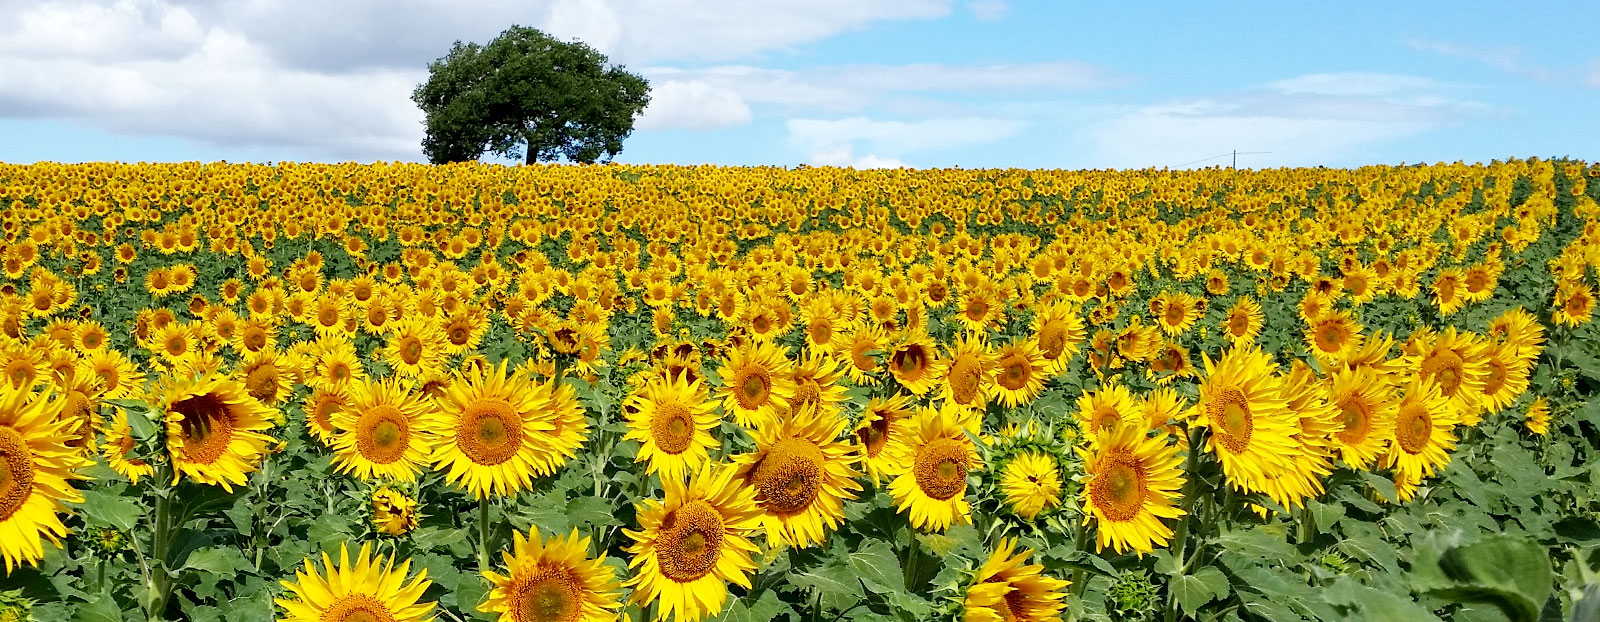 Sunflower in its natural habitat